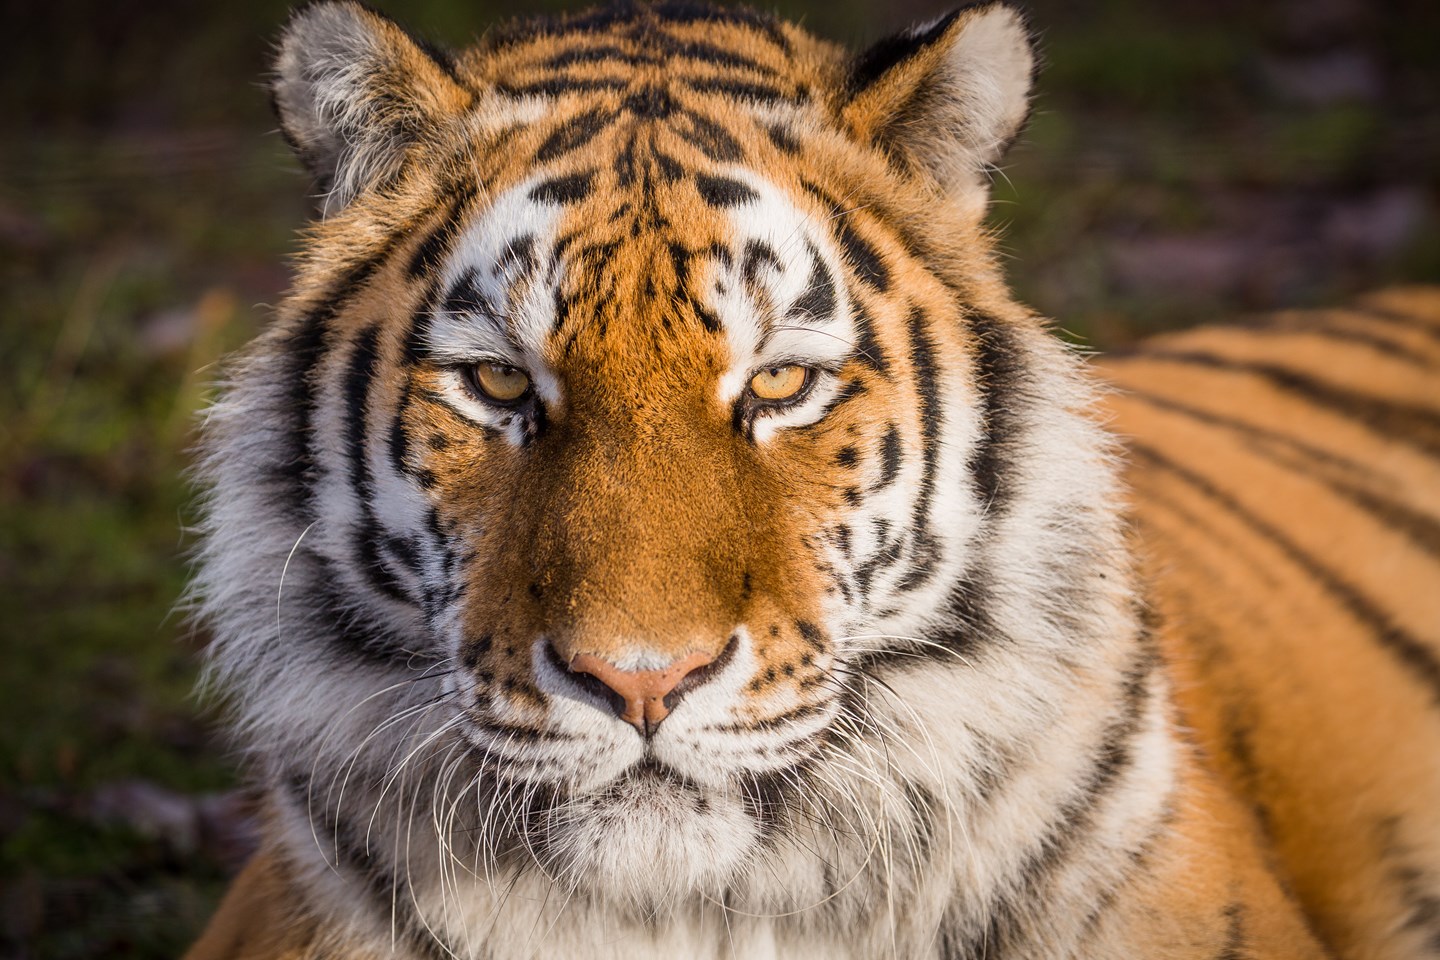 Image of woburn safari park tiger dec 2019 13